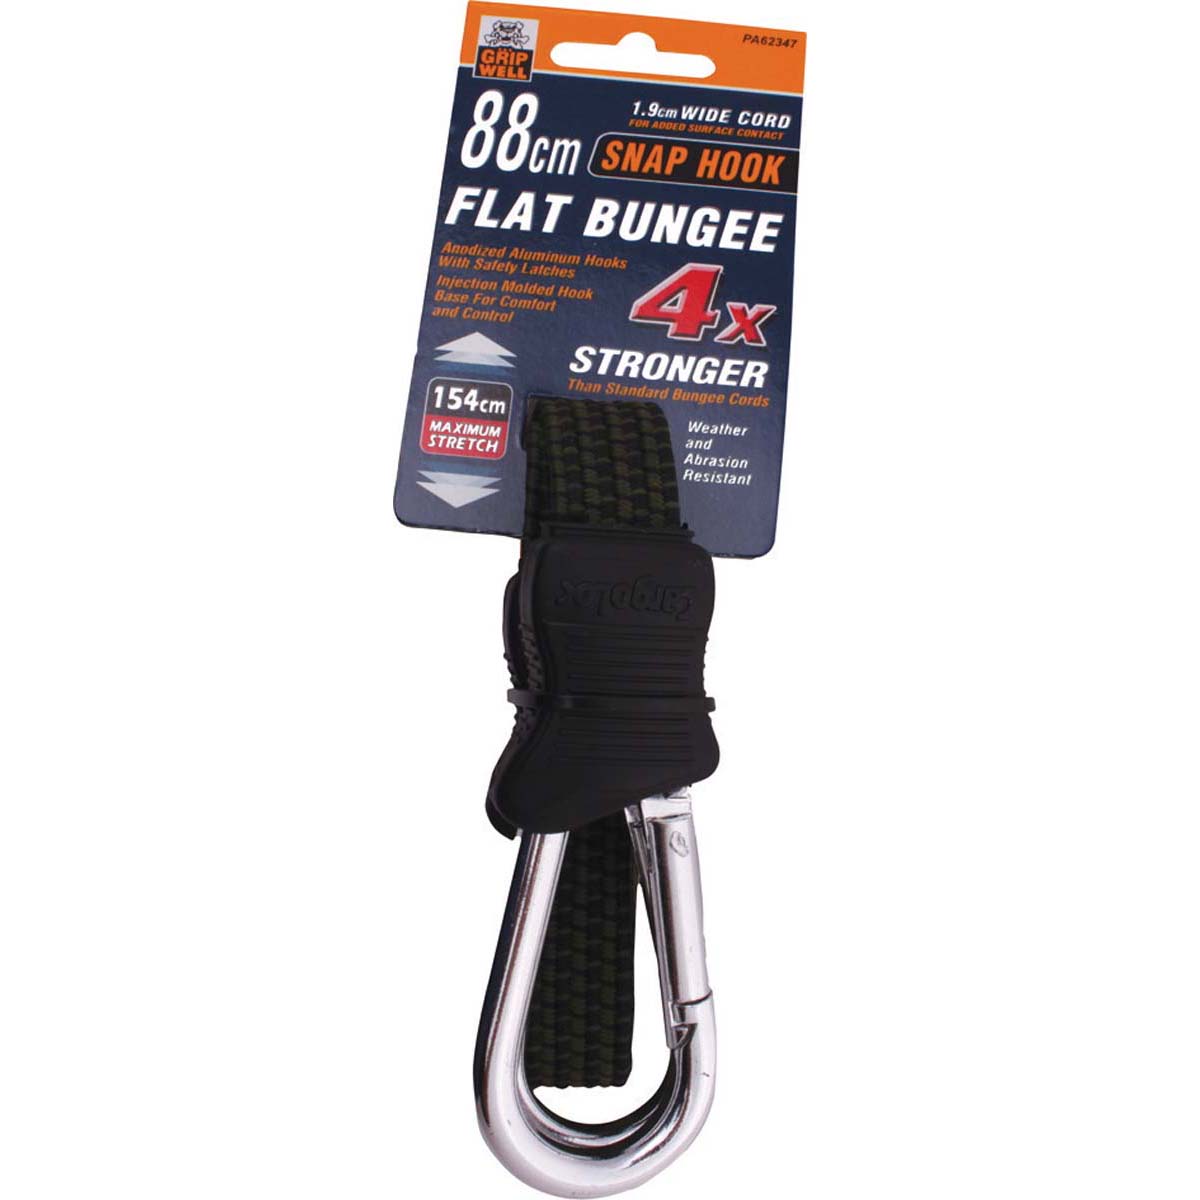 Flat Bungee Strap - Snap Hook, 88cm 88cm